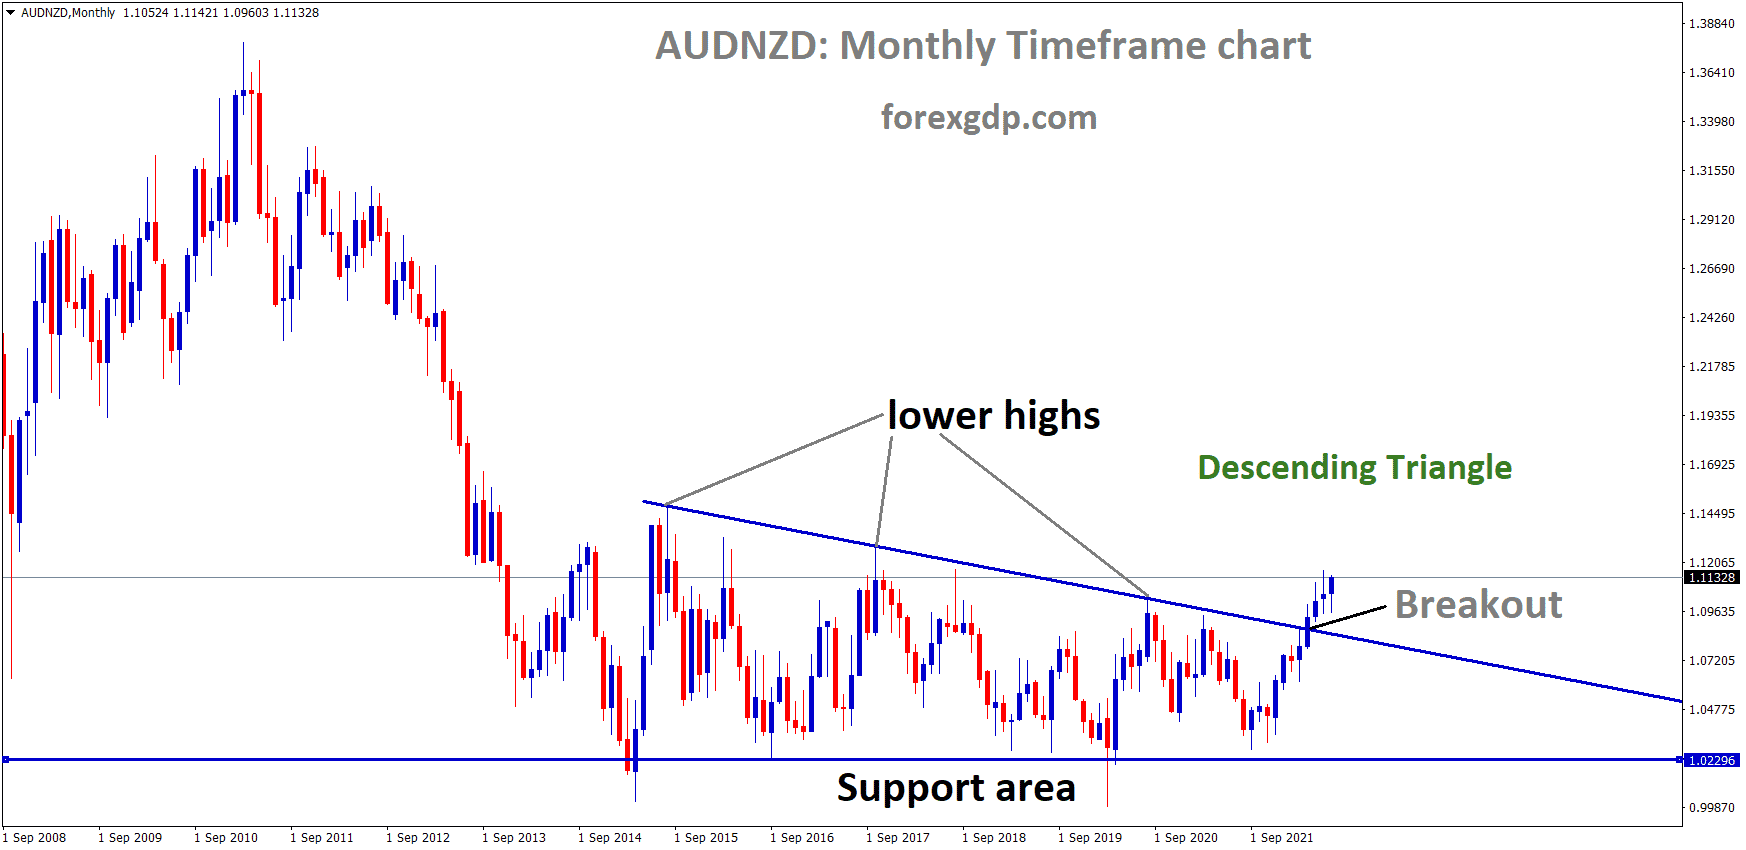 AUDNZD Monthly TF analysisMarket has broken the Descending triangle pattern in Upside. 1